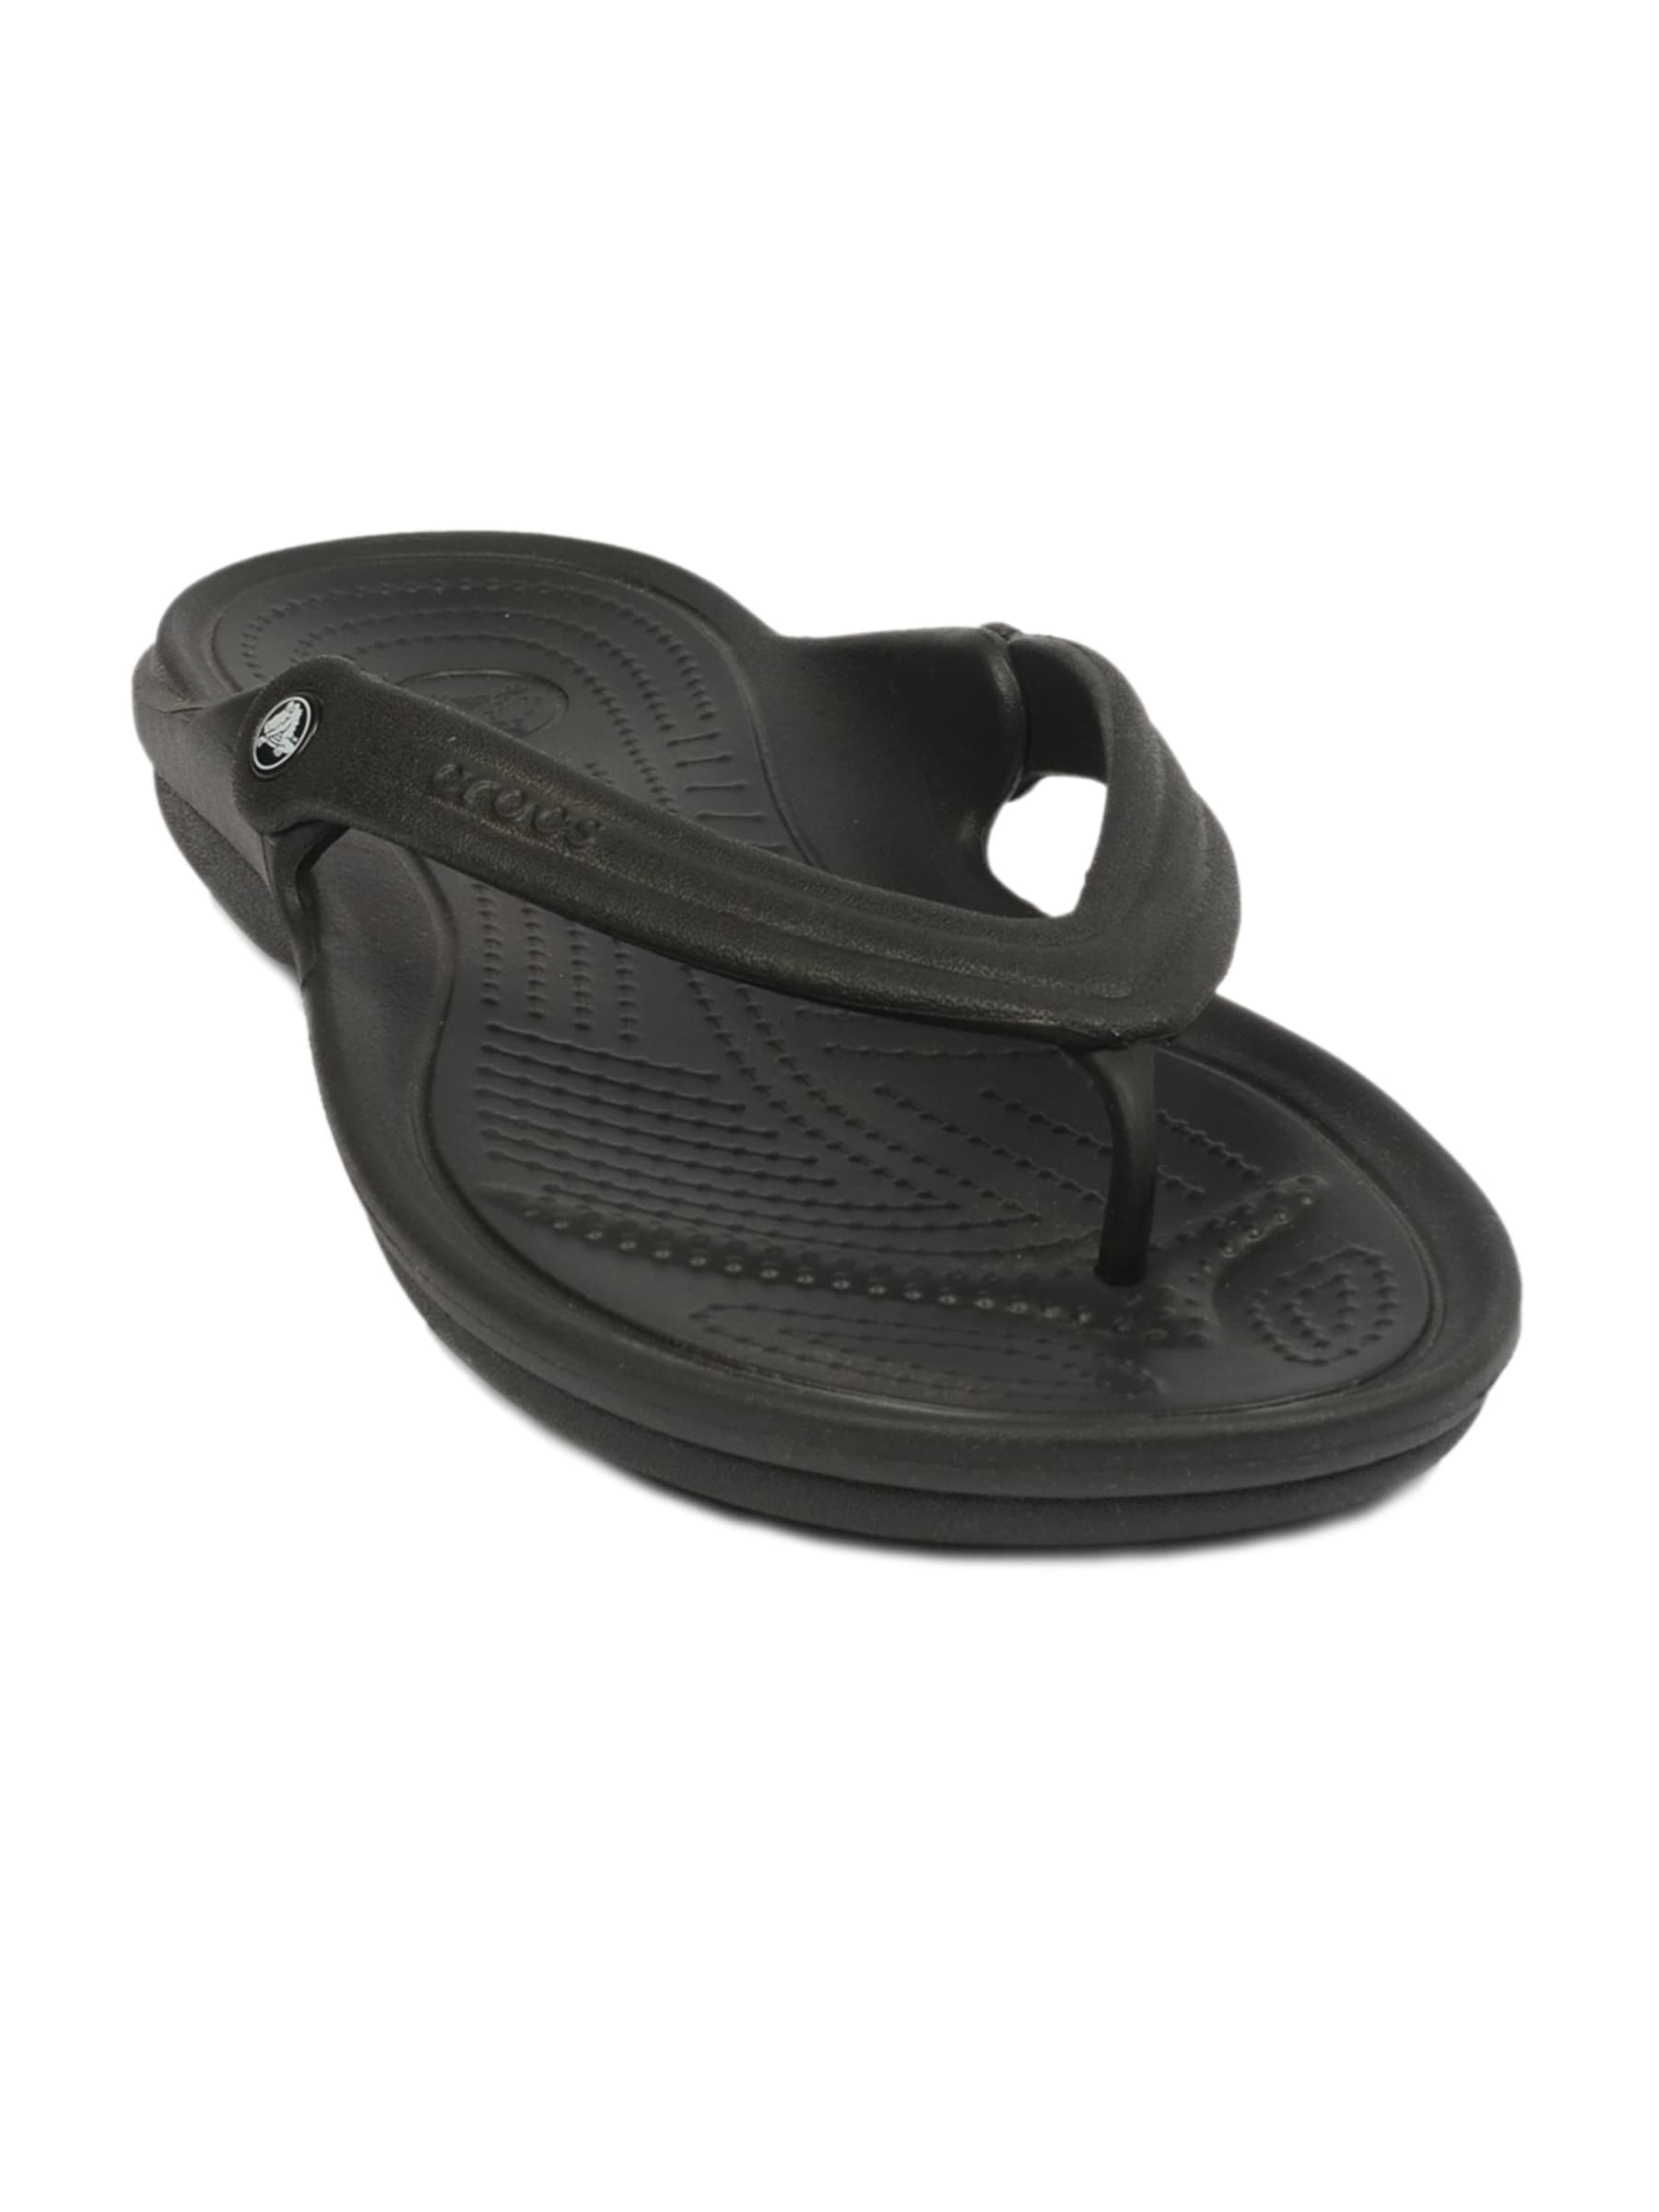 Crocs Douet Black Flip Sandals